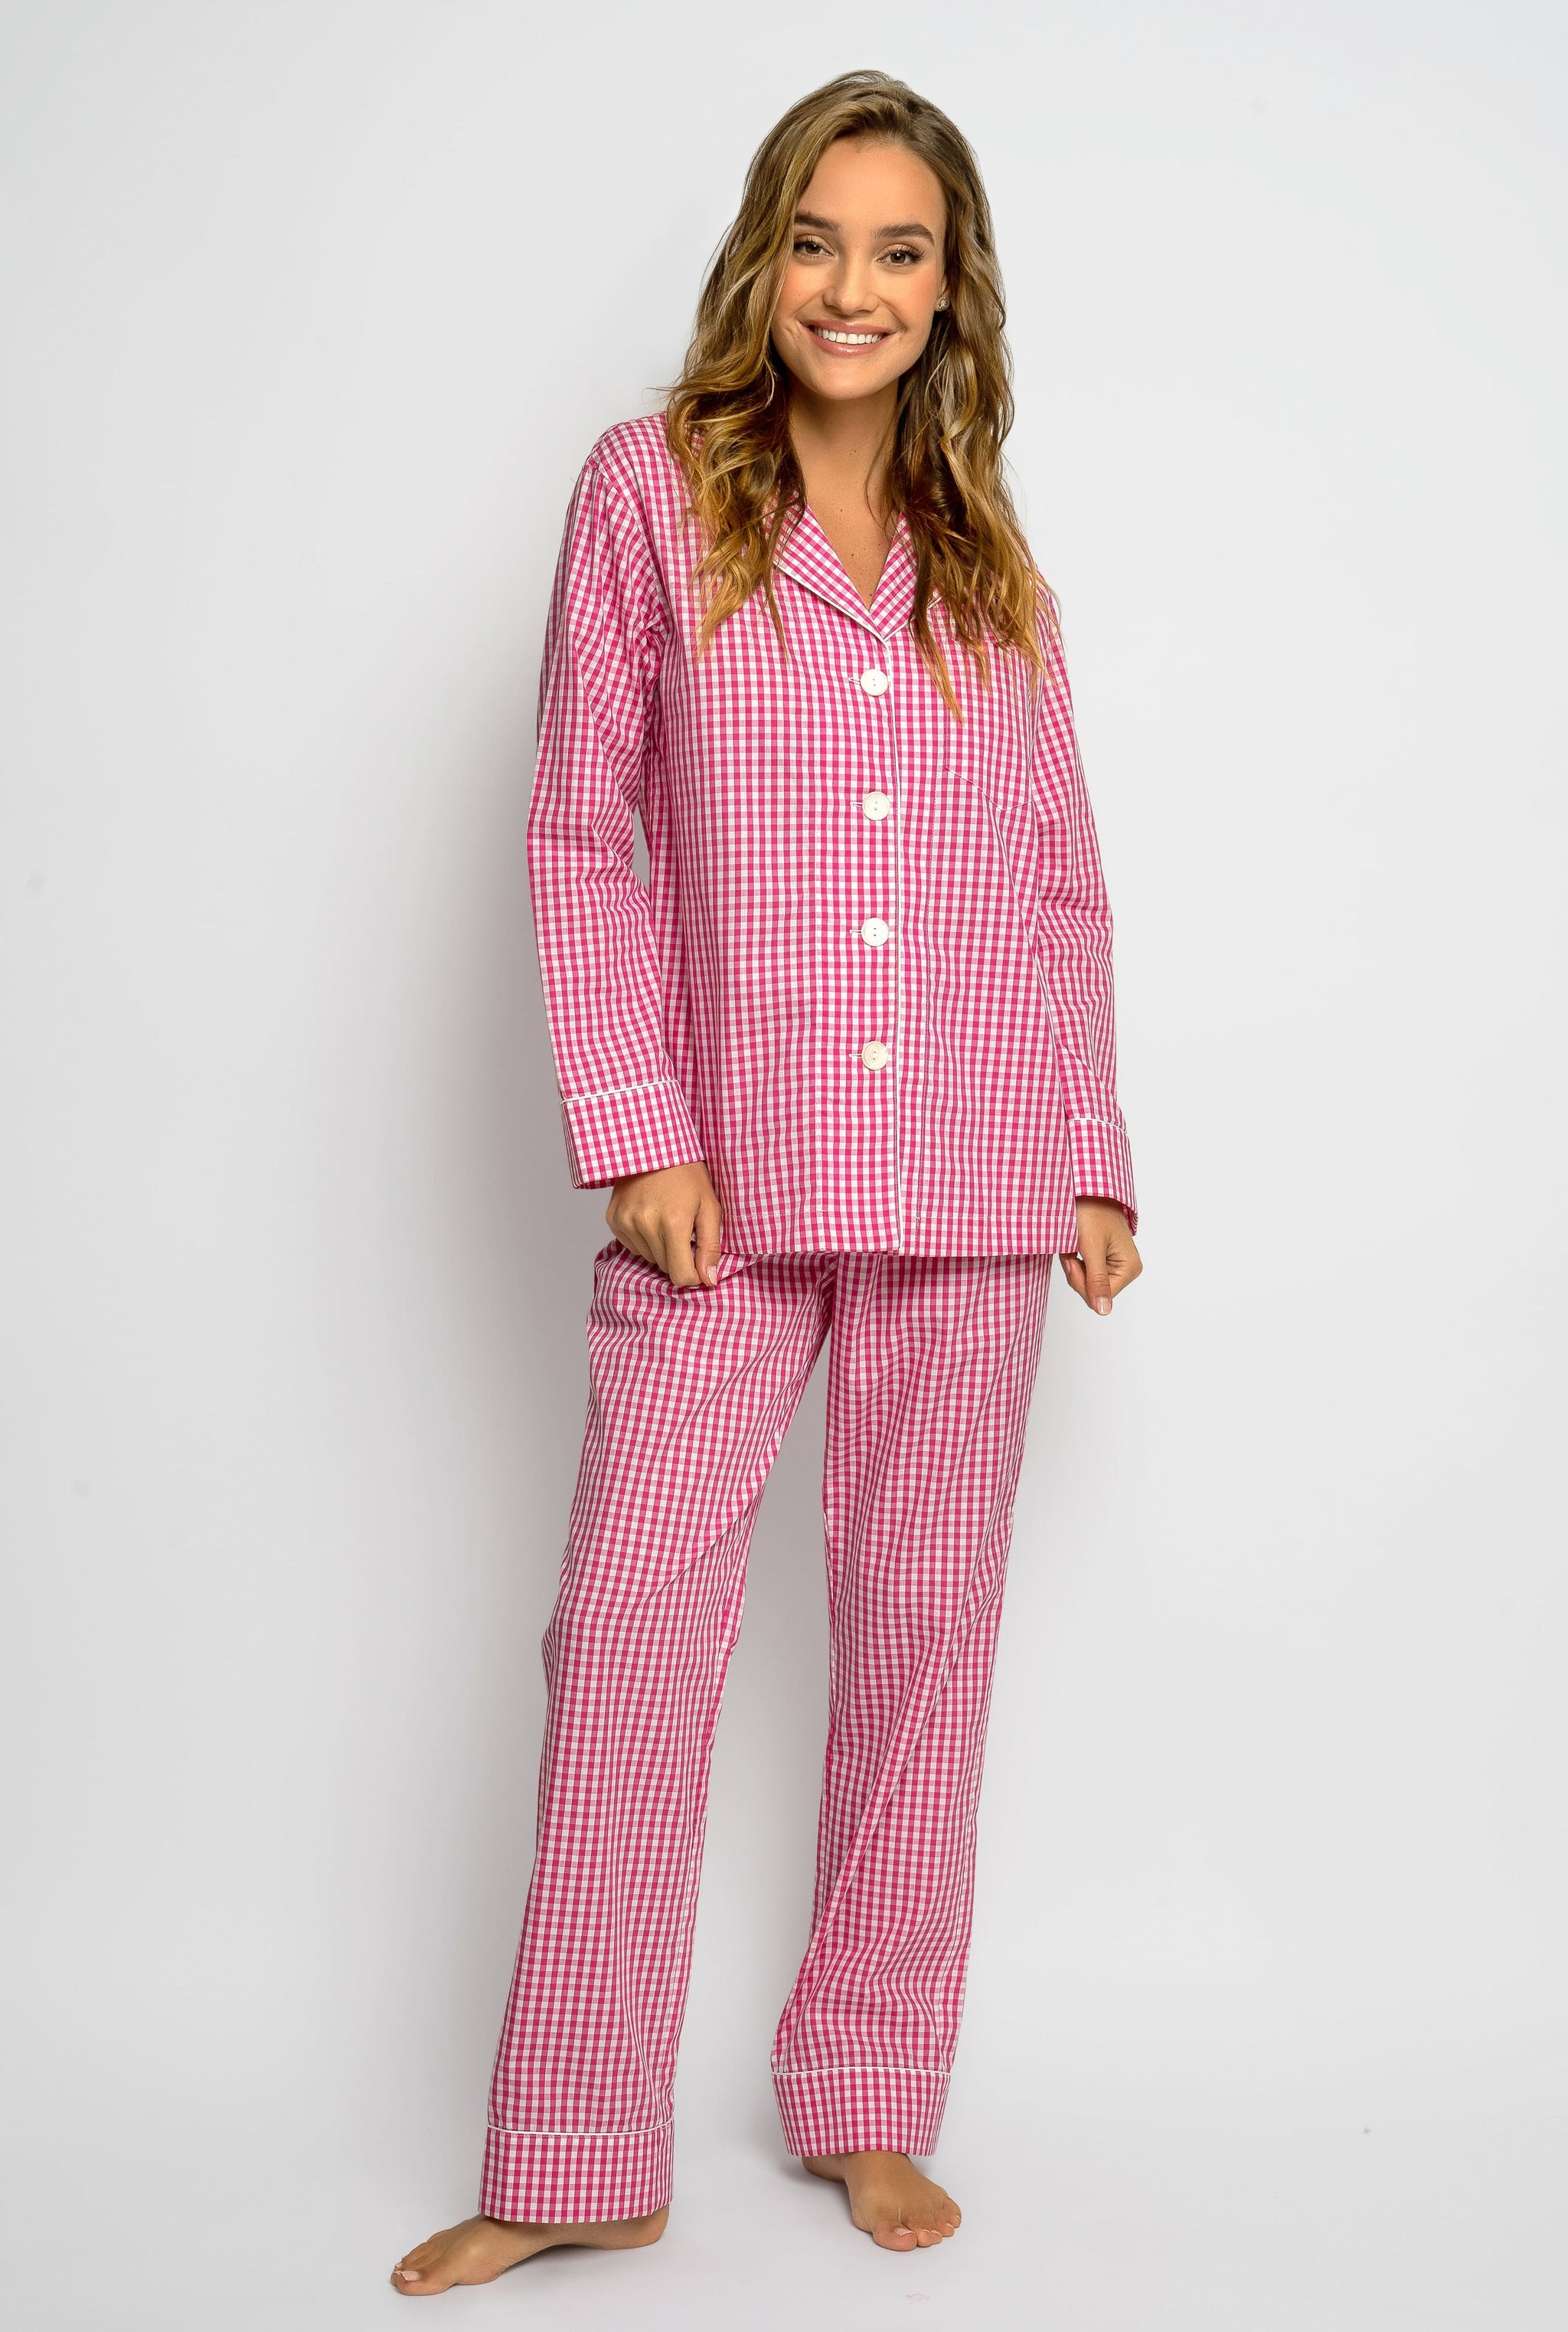 Women's Cotton Pajamas - Elizabeth Cotton